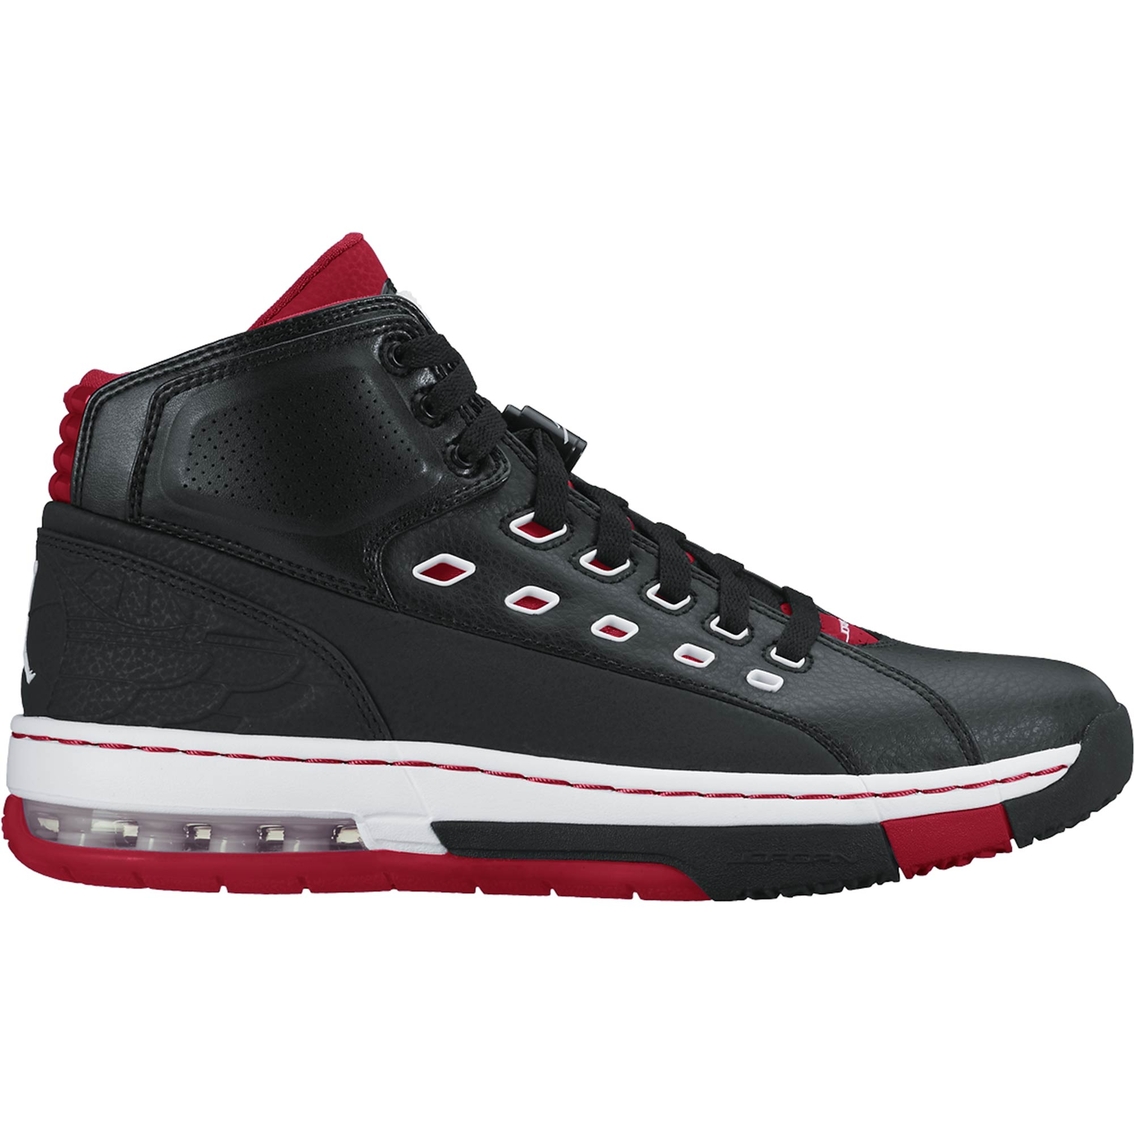 Jordan Men's Ol' School Basketball Shoes Sneakers